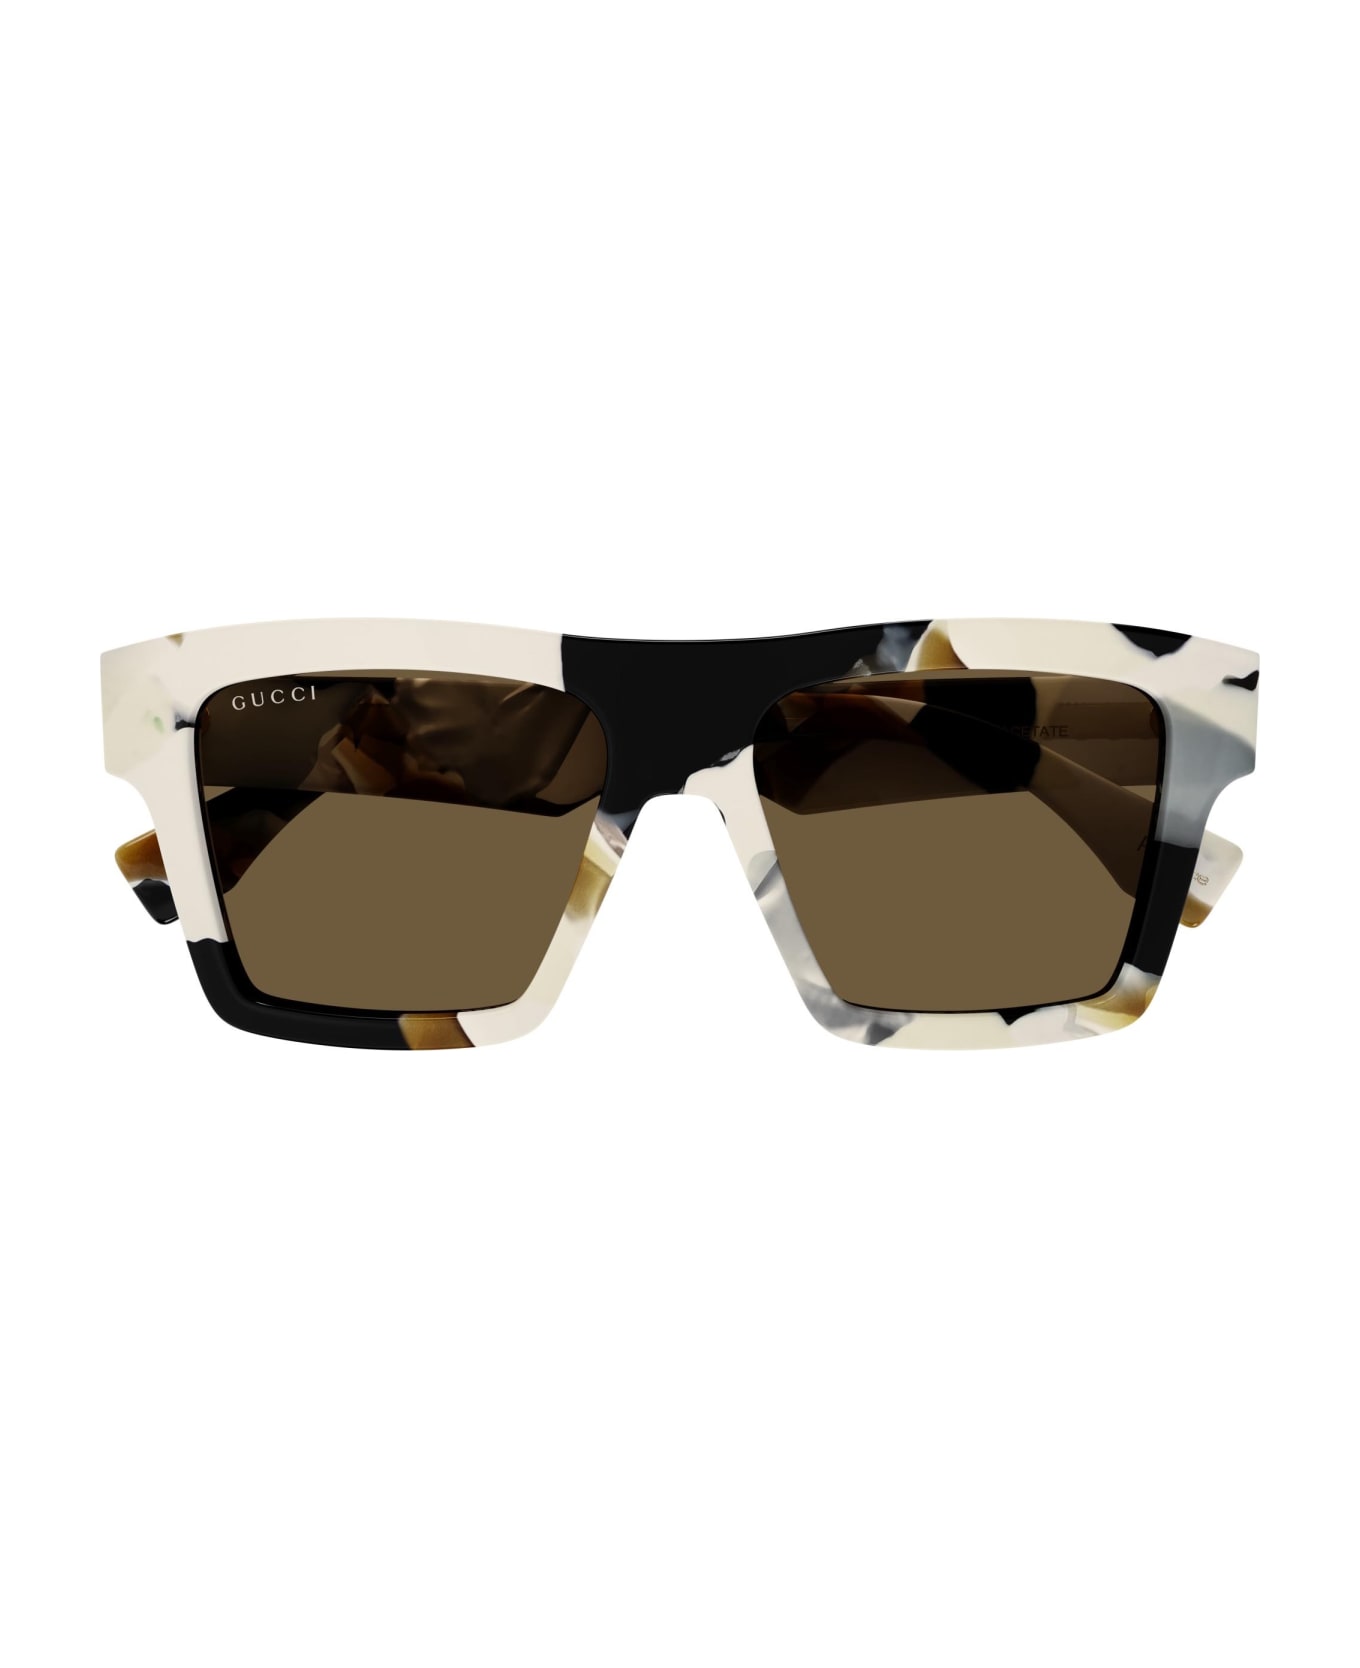 Gucci Eyewear Sunglasses - Bianco e marrone tartarugato/Marrone